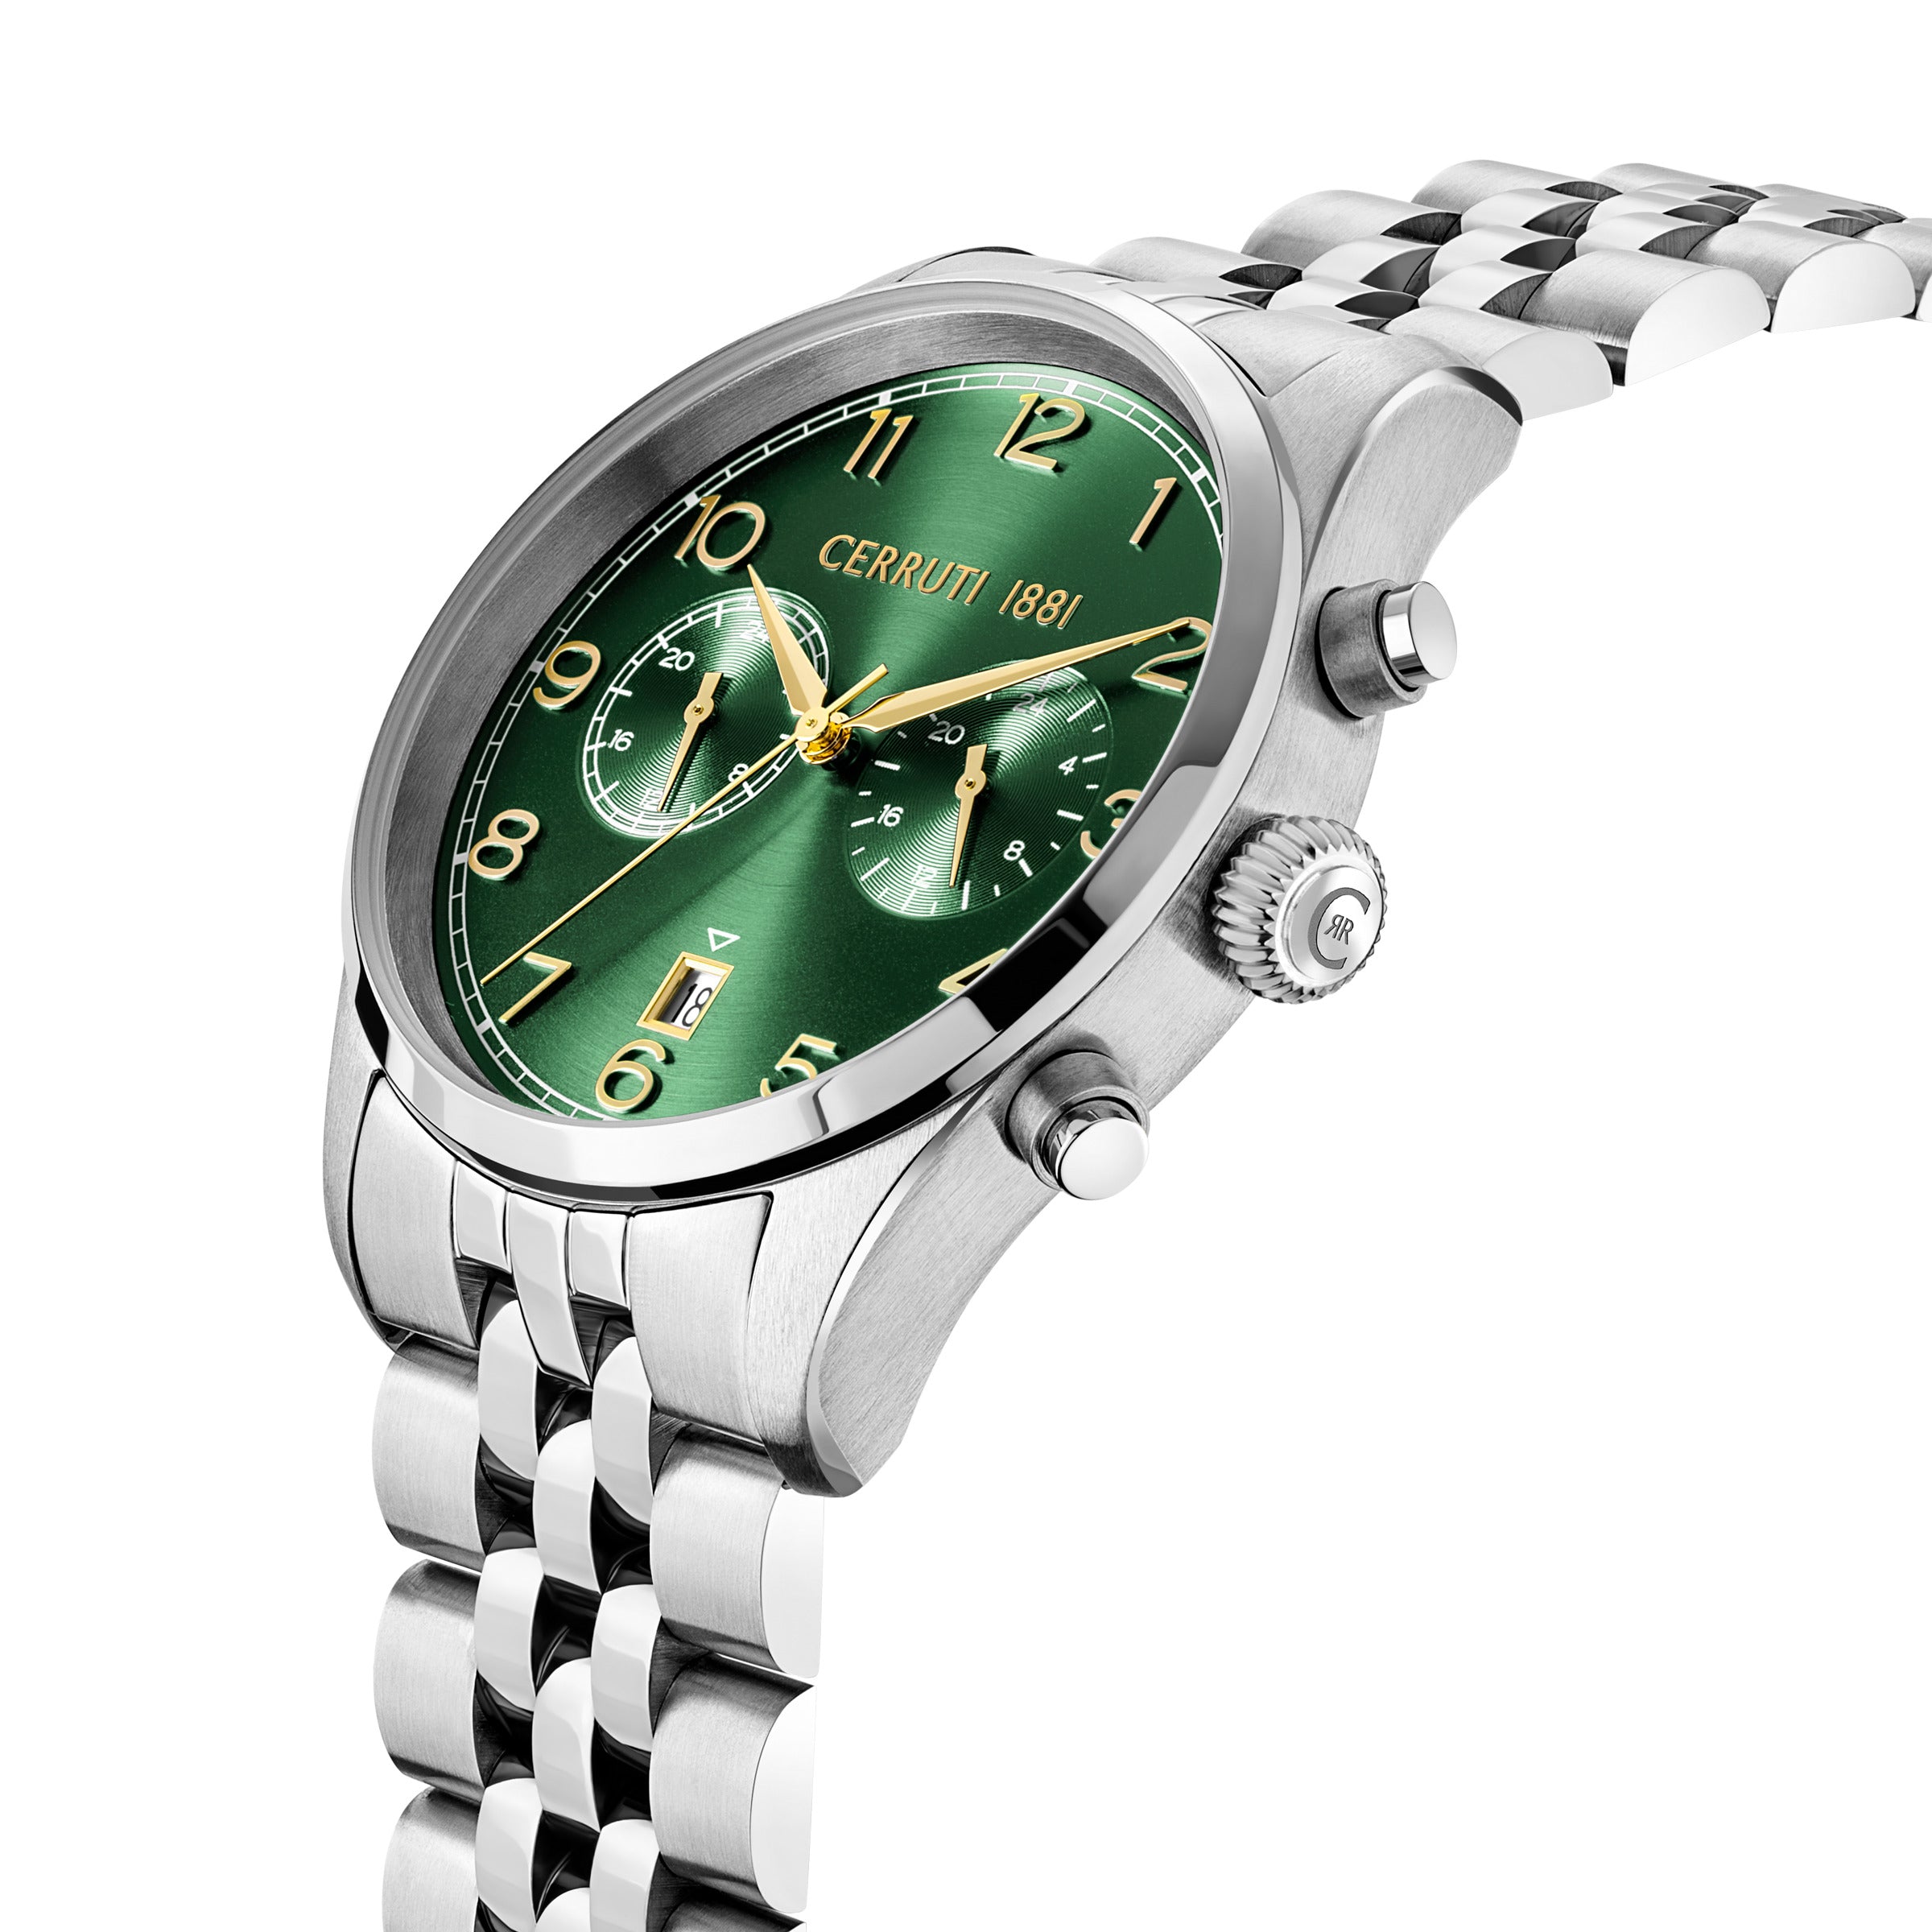 Cerruti Men's Quartz Green Dial Watch - CER-0423